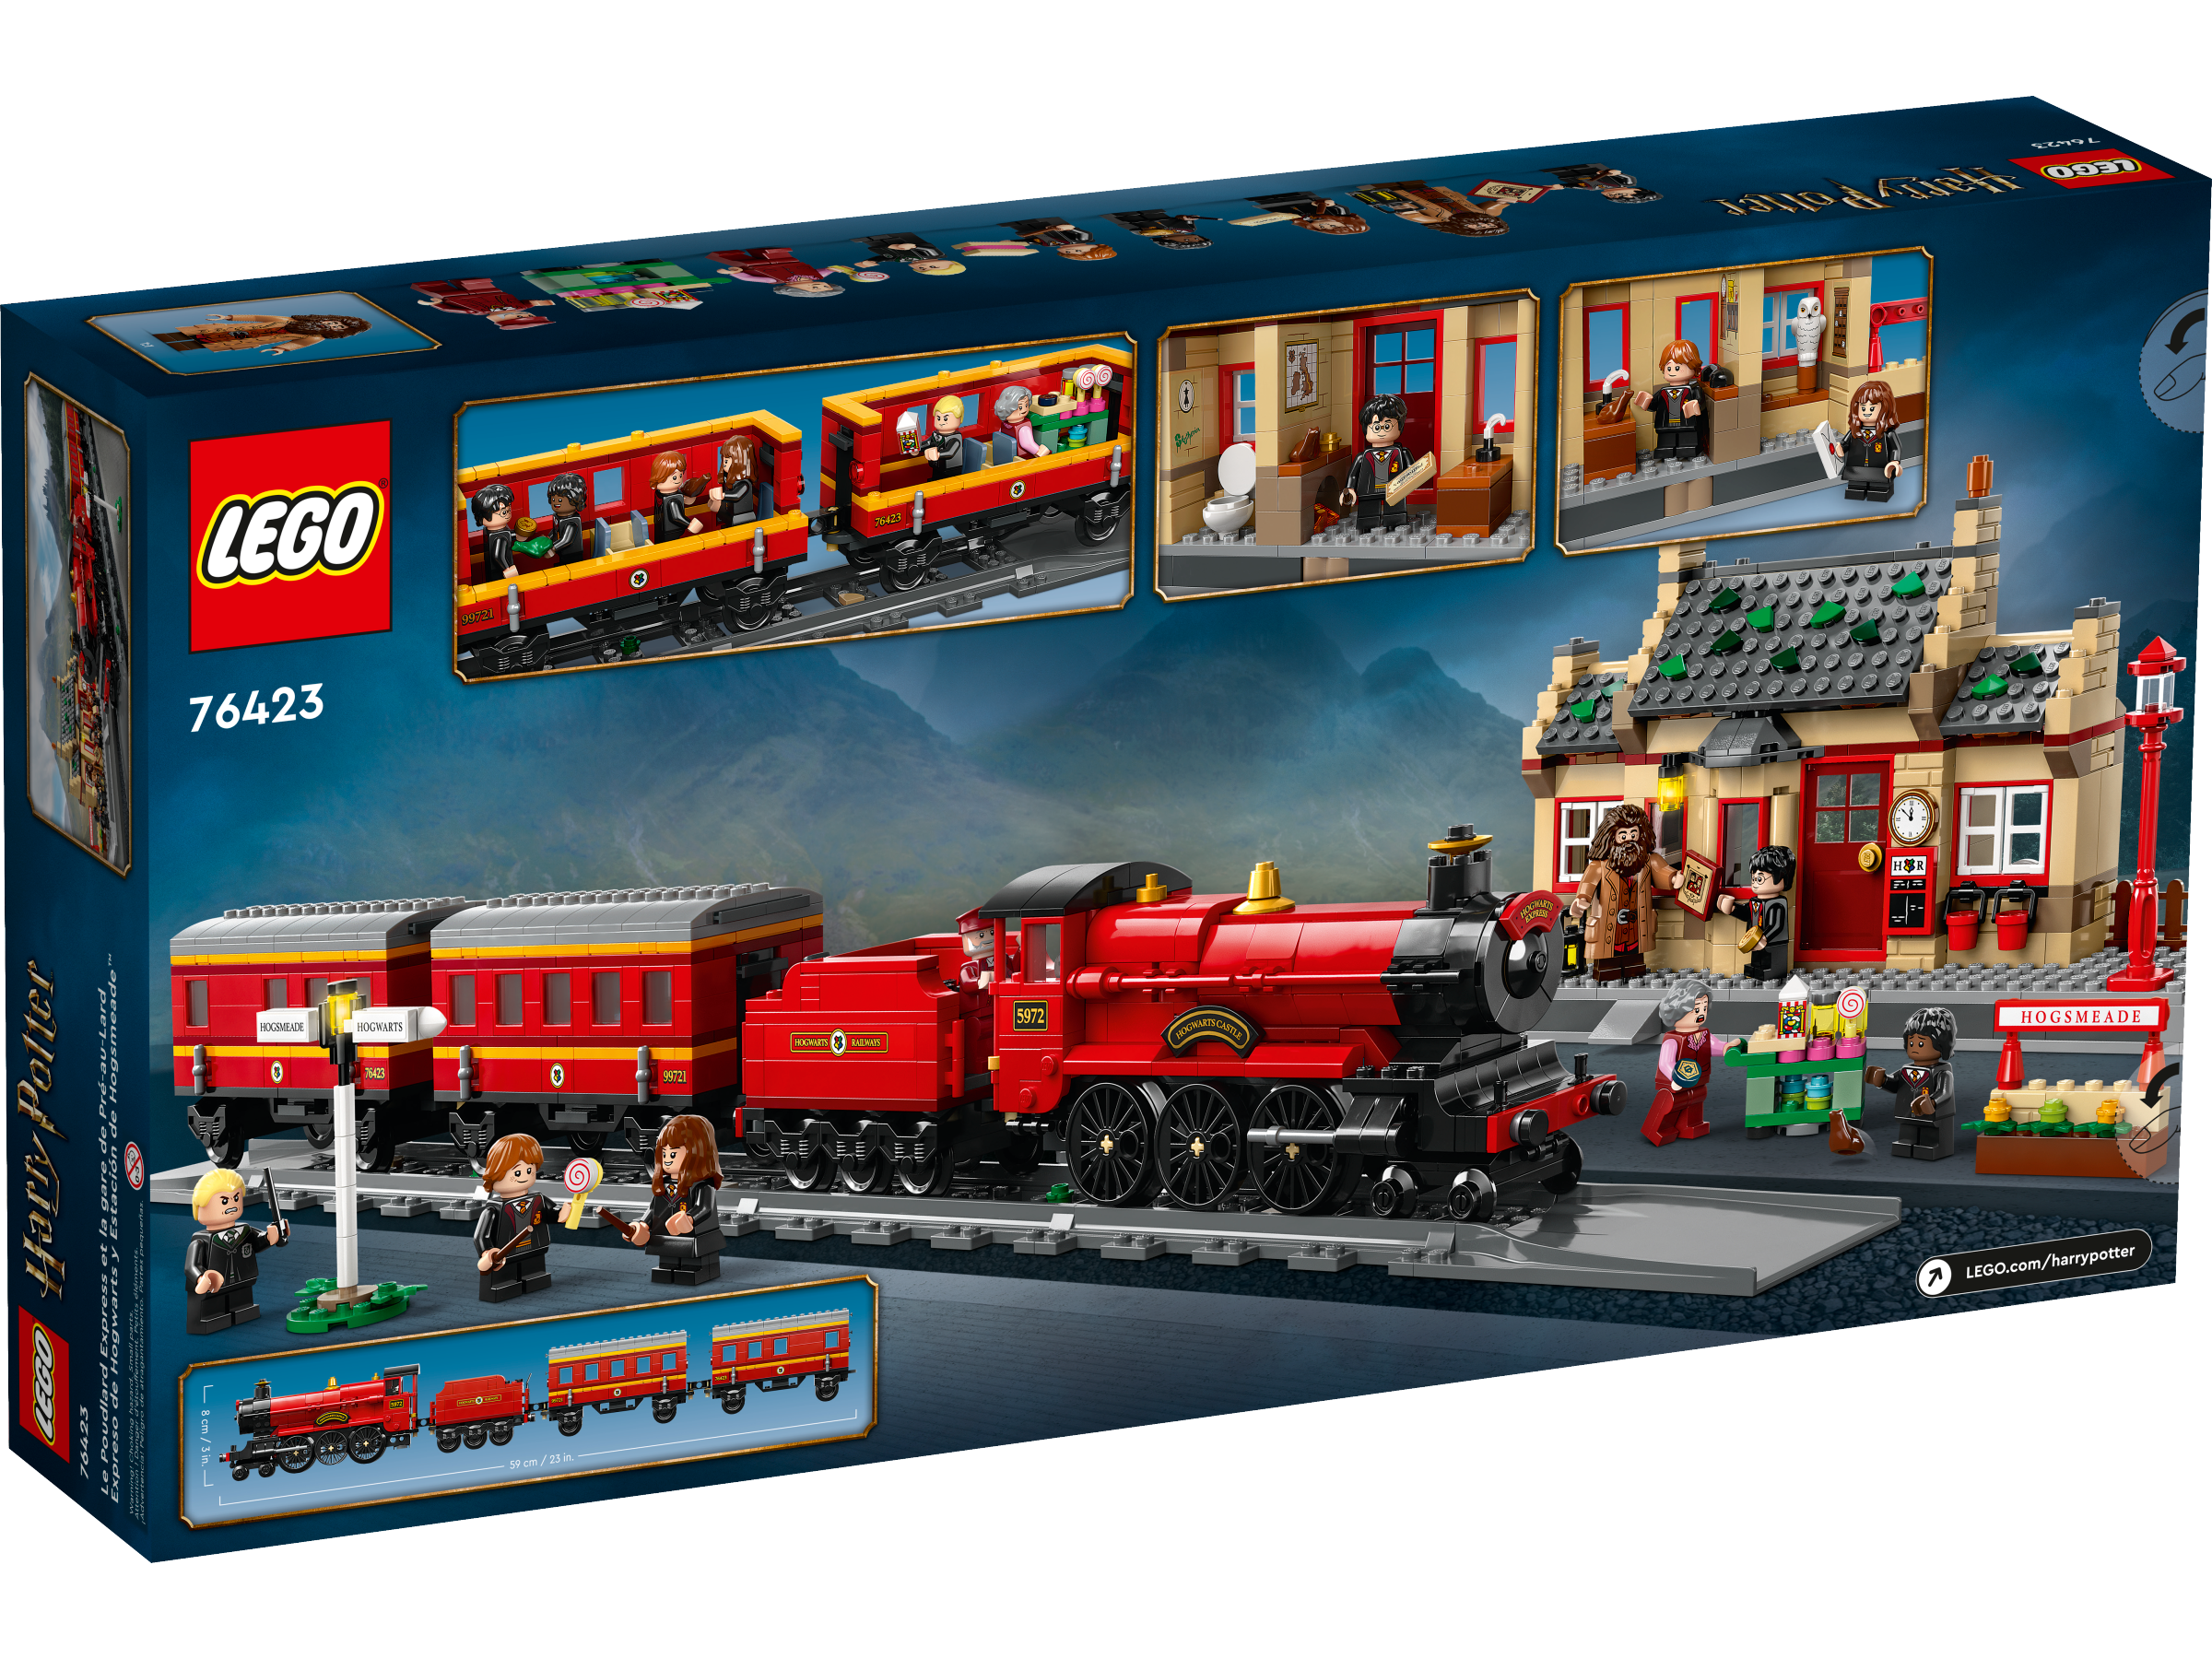 LEGO Harry Potter 76423 Hogwarts Express & Hogsmeade Station